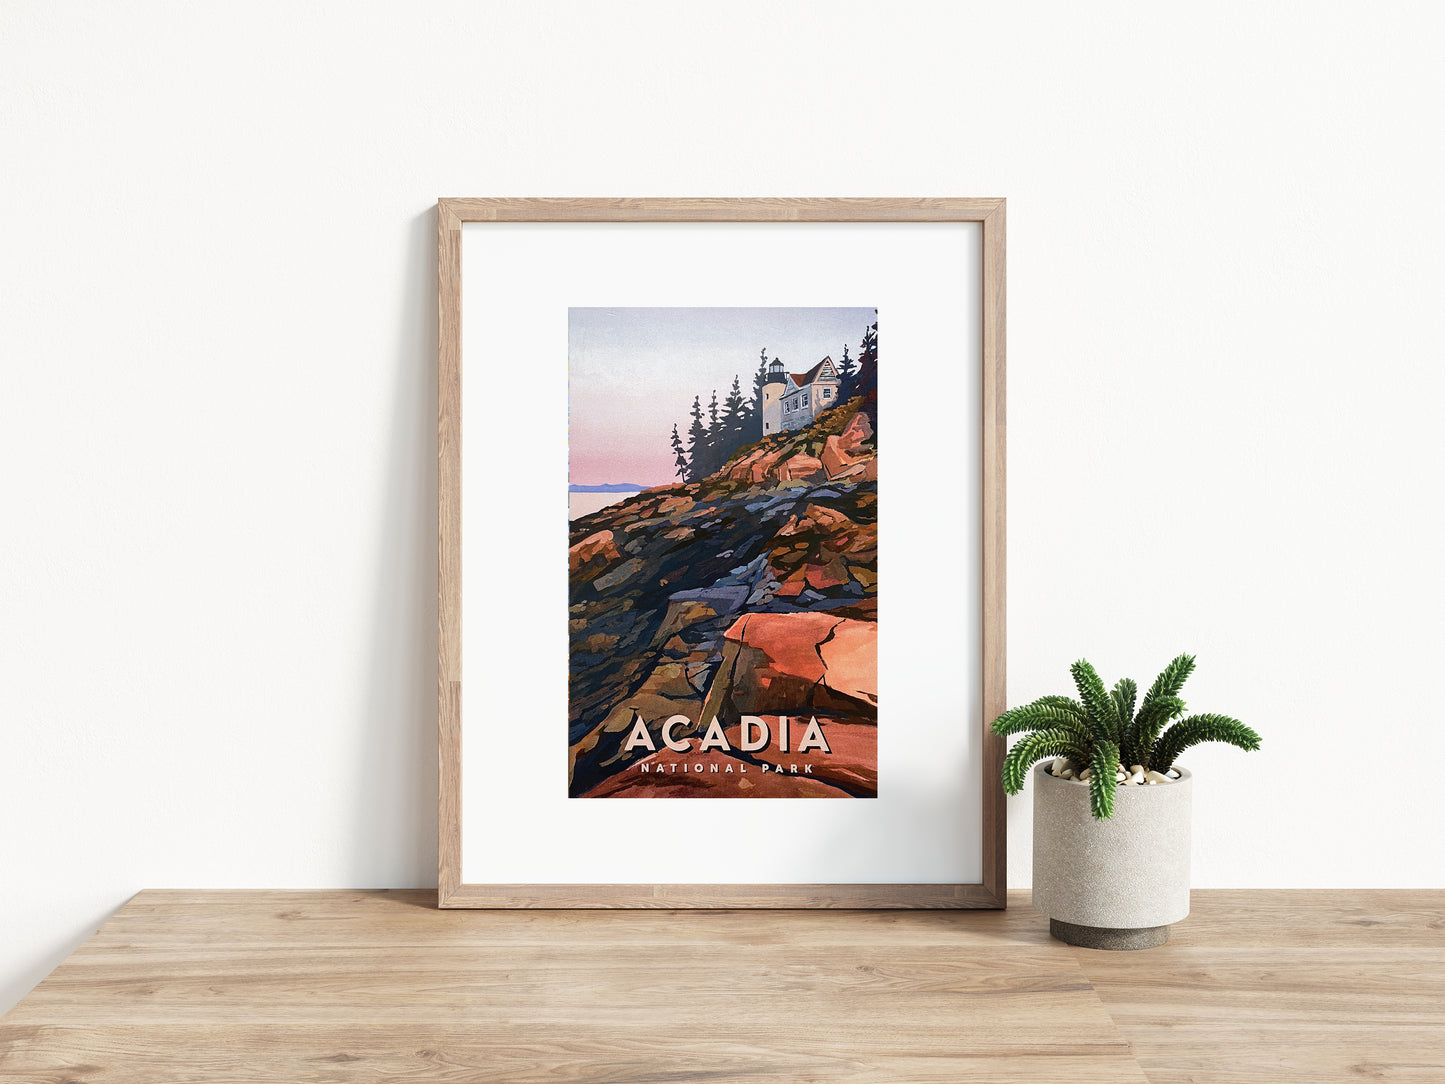 'Acadia' National Park Travel Poster